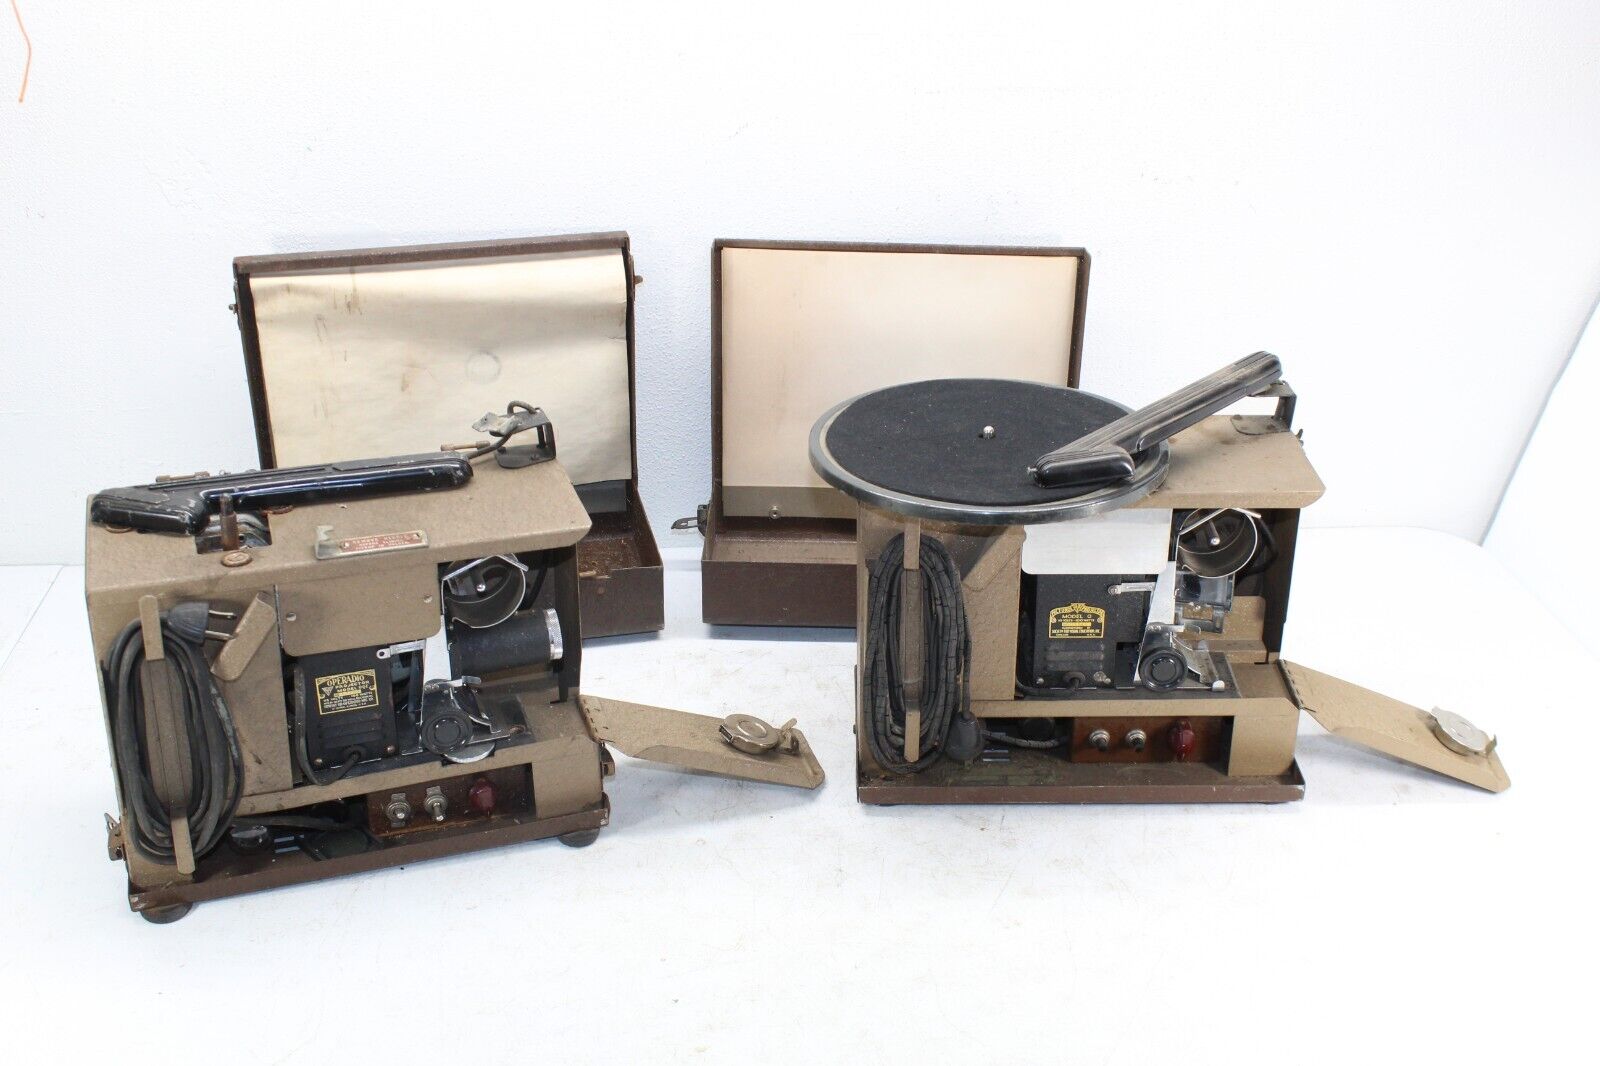 Operadio Explainette 35mm Filmstrip Projector Phonograph - PAIR for PARTS/REPAIR